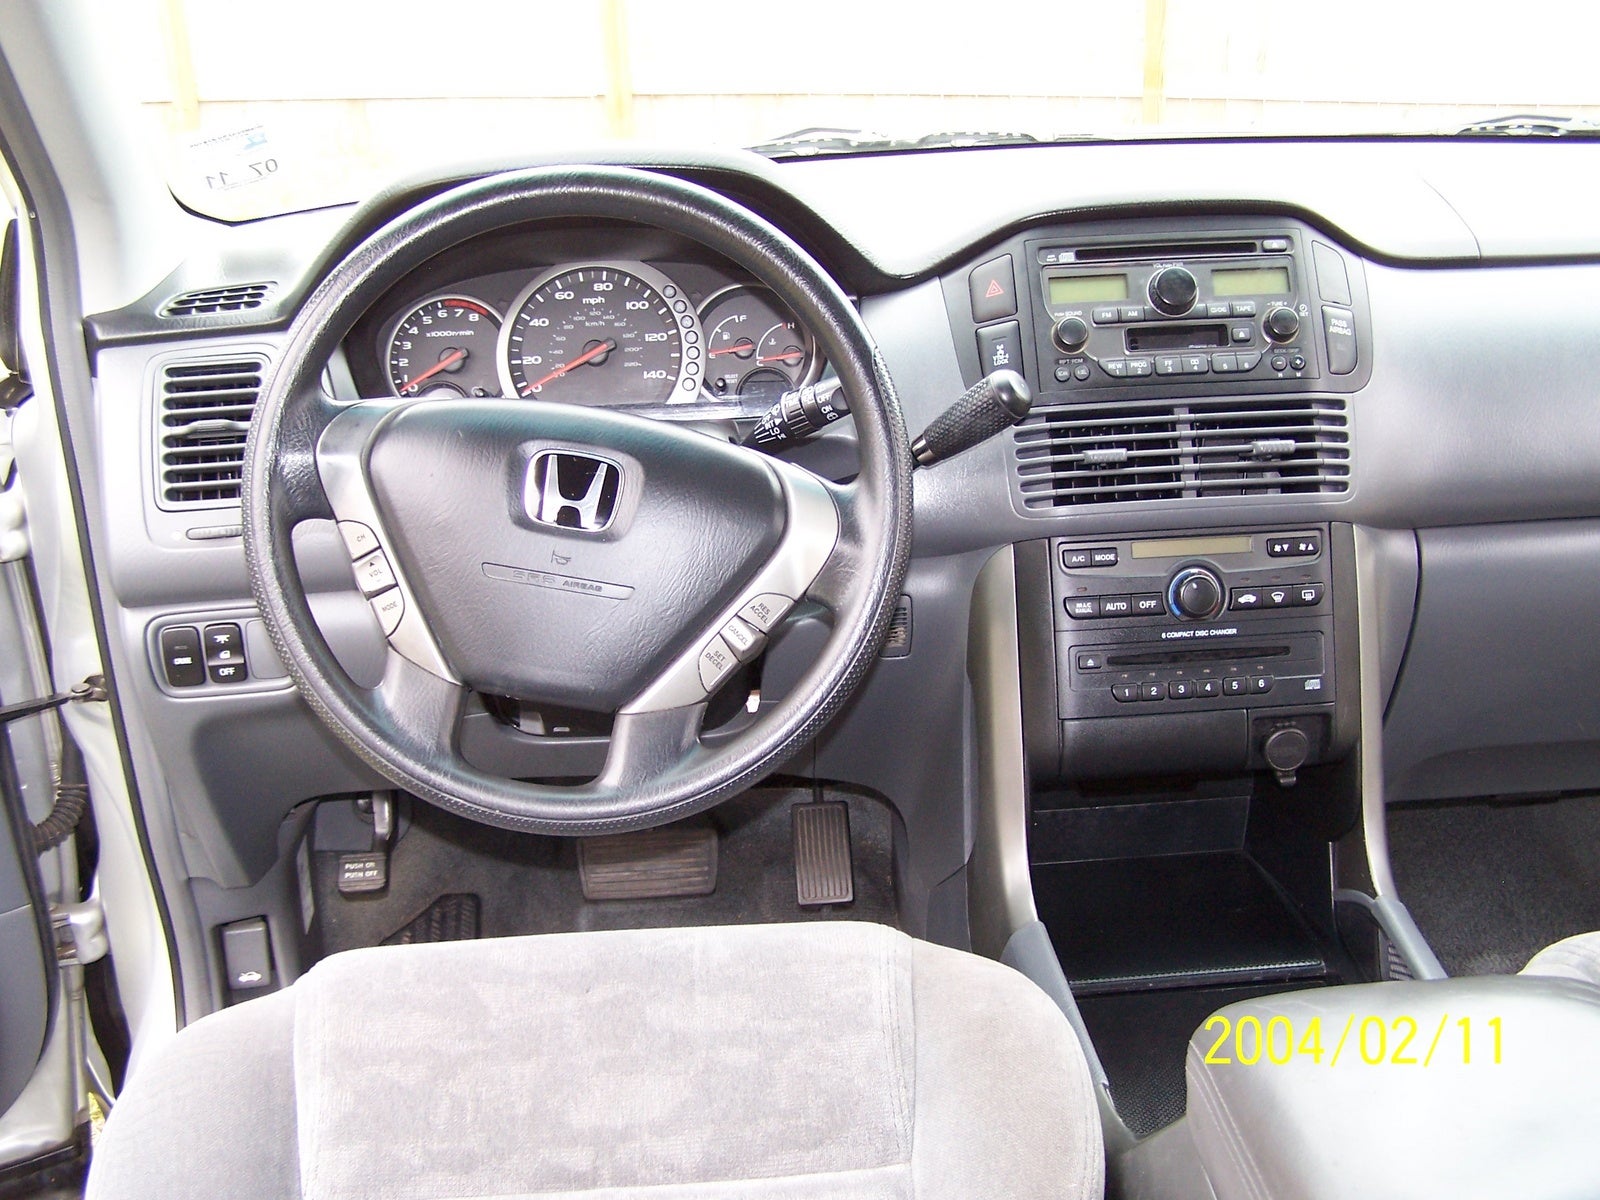 Honda pilot 2005 interior